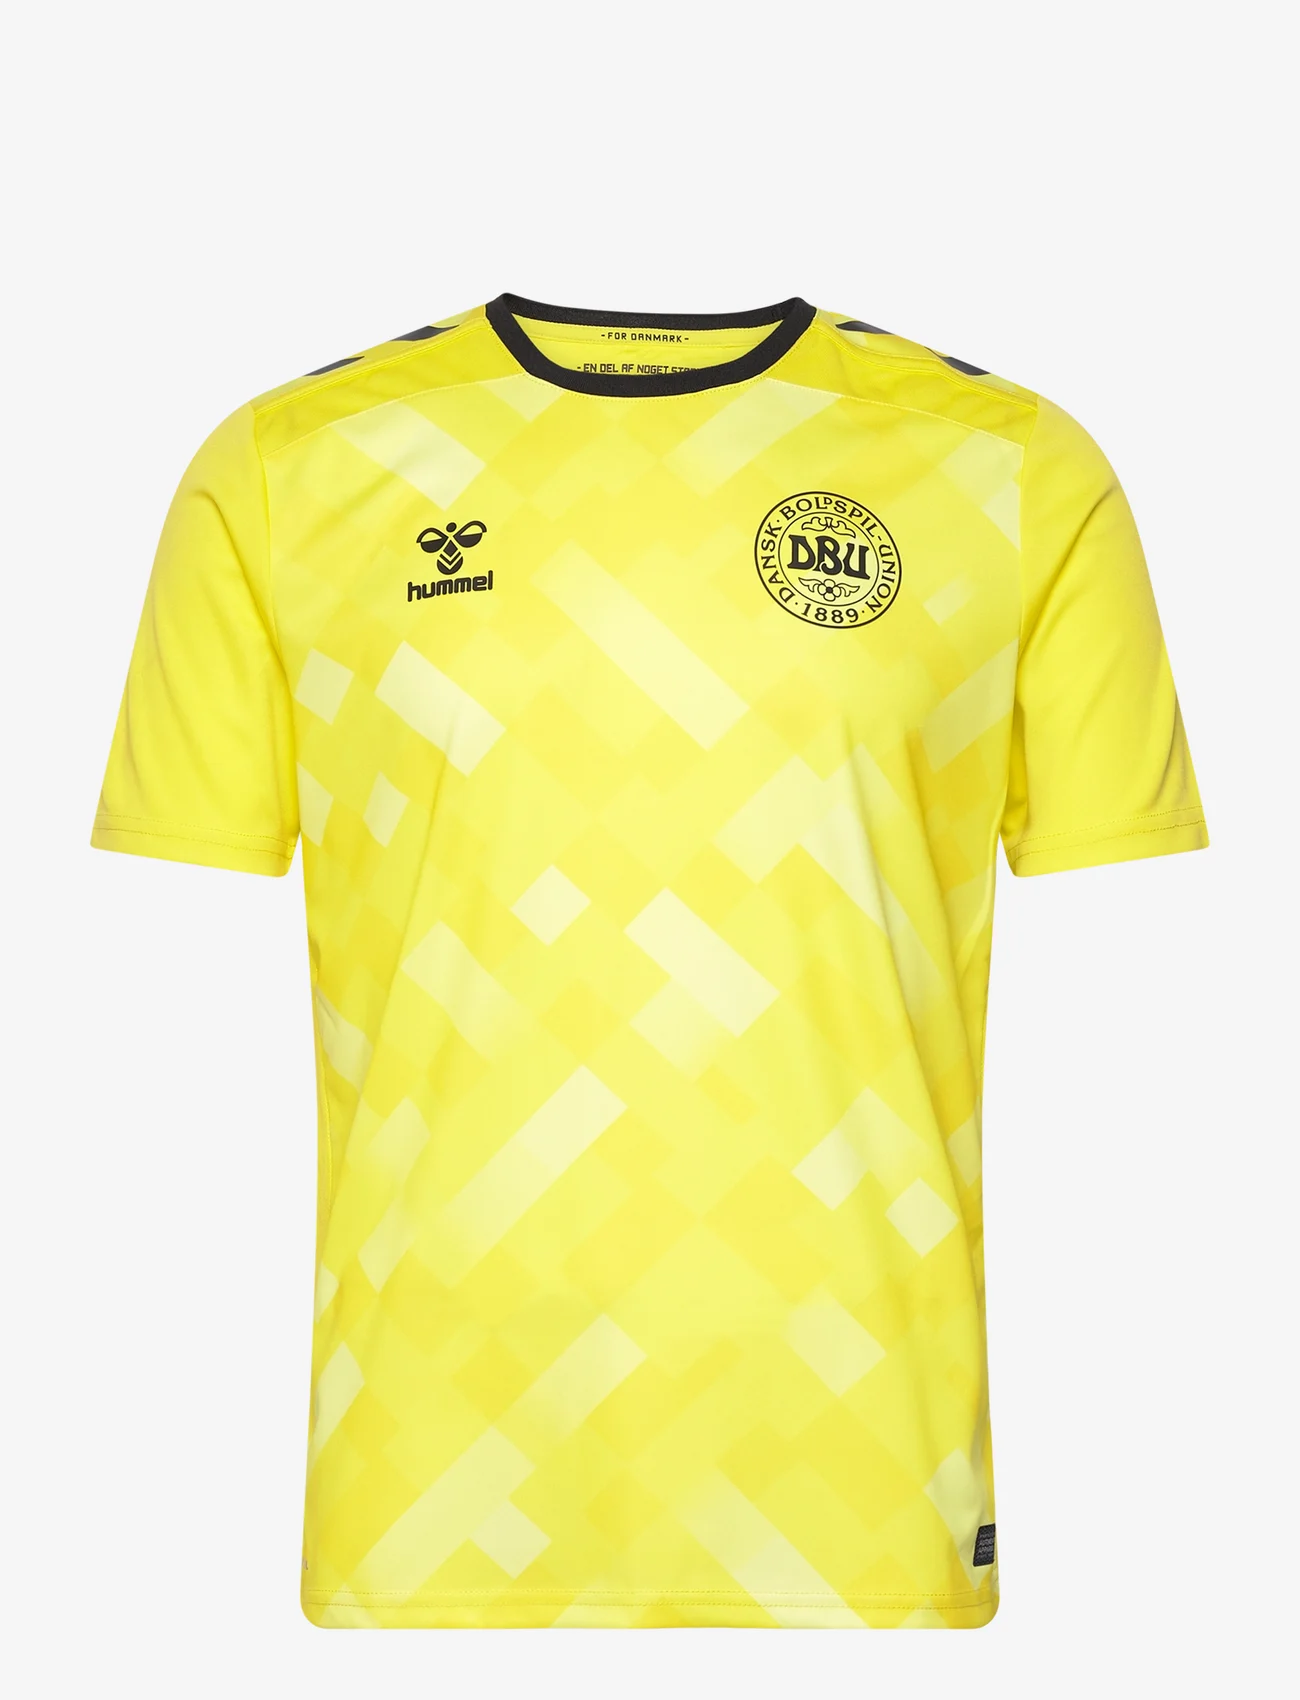 Hummel - DBU 24 GK JERSEY S/S - futbolo marškinėliai - blazing yellow - 0